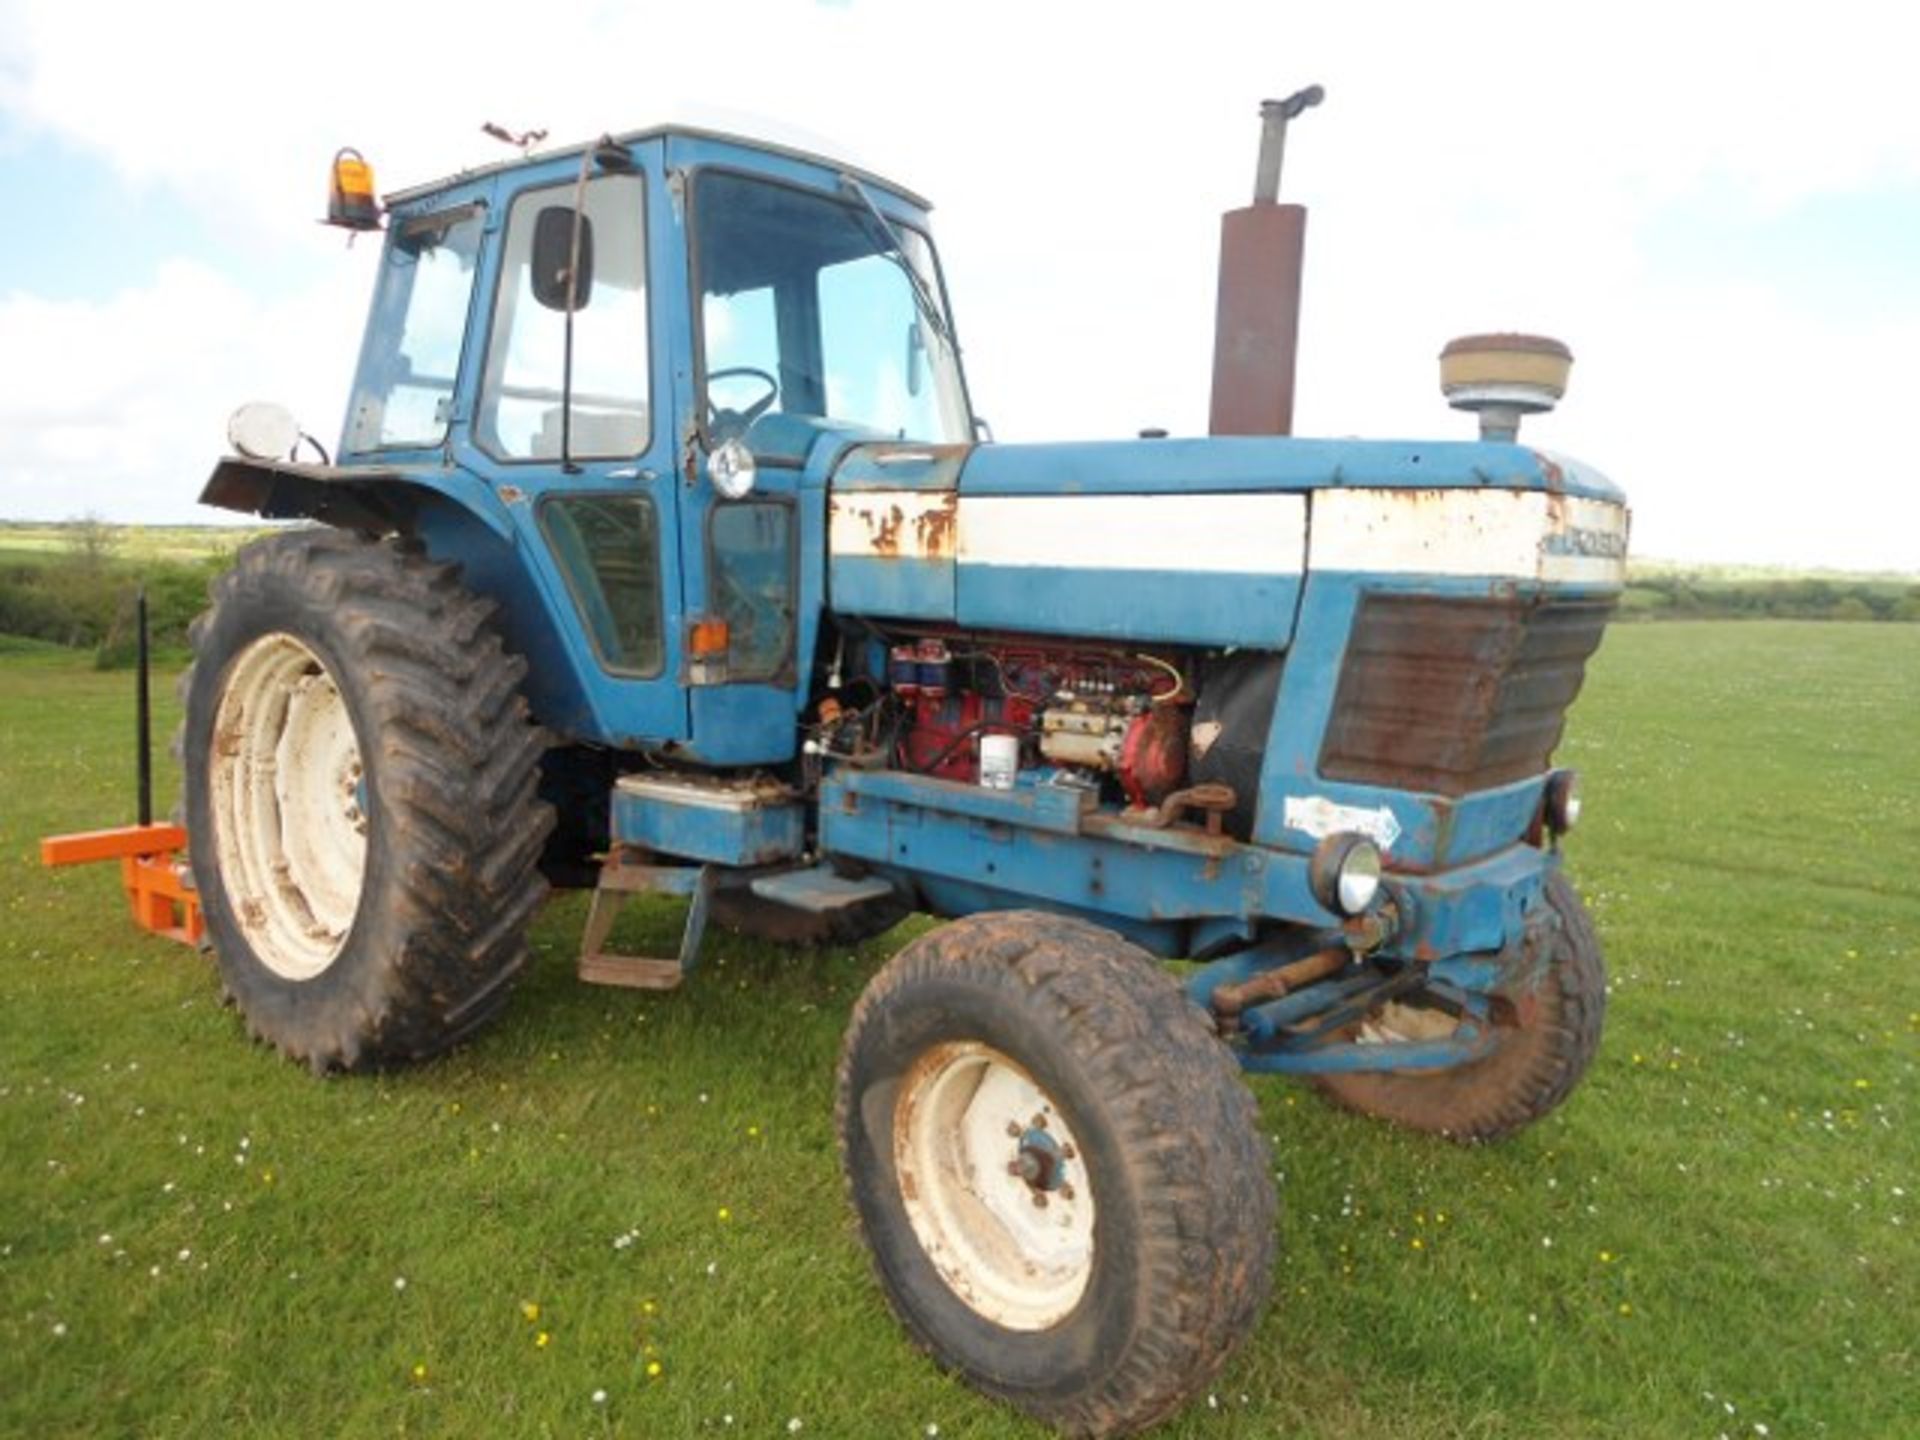 1977/8 Ford 8100 2wd Tractor. Location Tiverton, Devon - Image 4 of 4